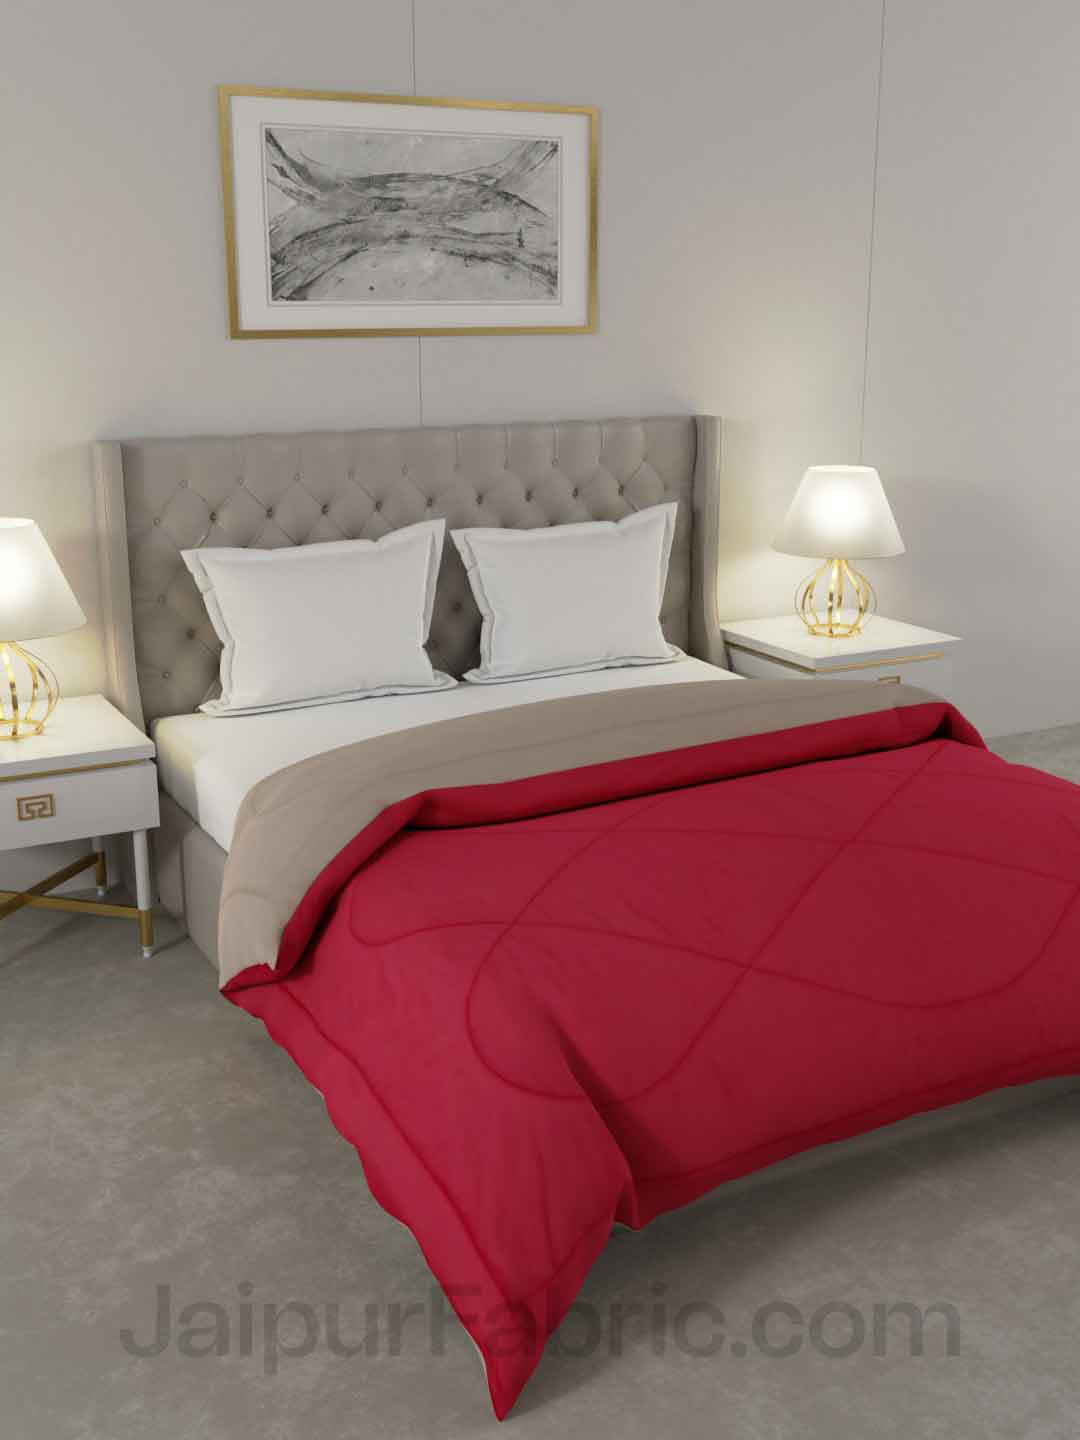 Pink-Grey Double Bed Comforter